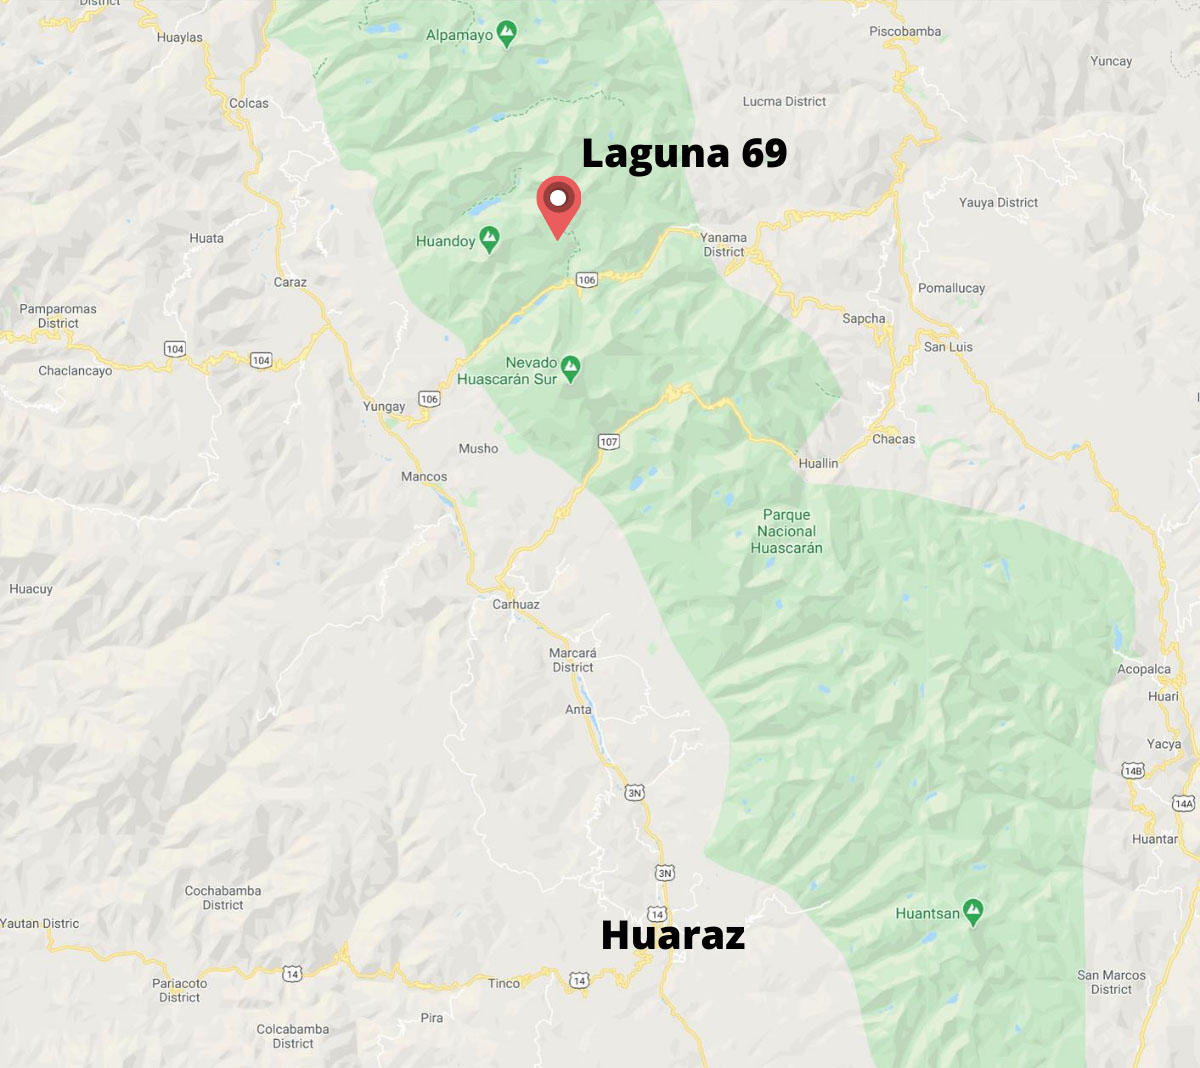 Laguna 69 on map. Laguna 69 is 57 miles (92.7 km) north of Huaraz city.